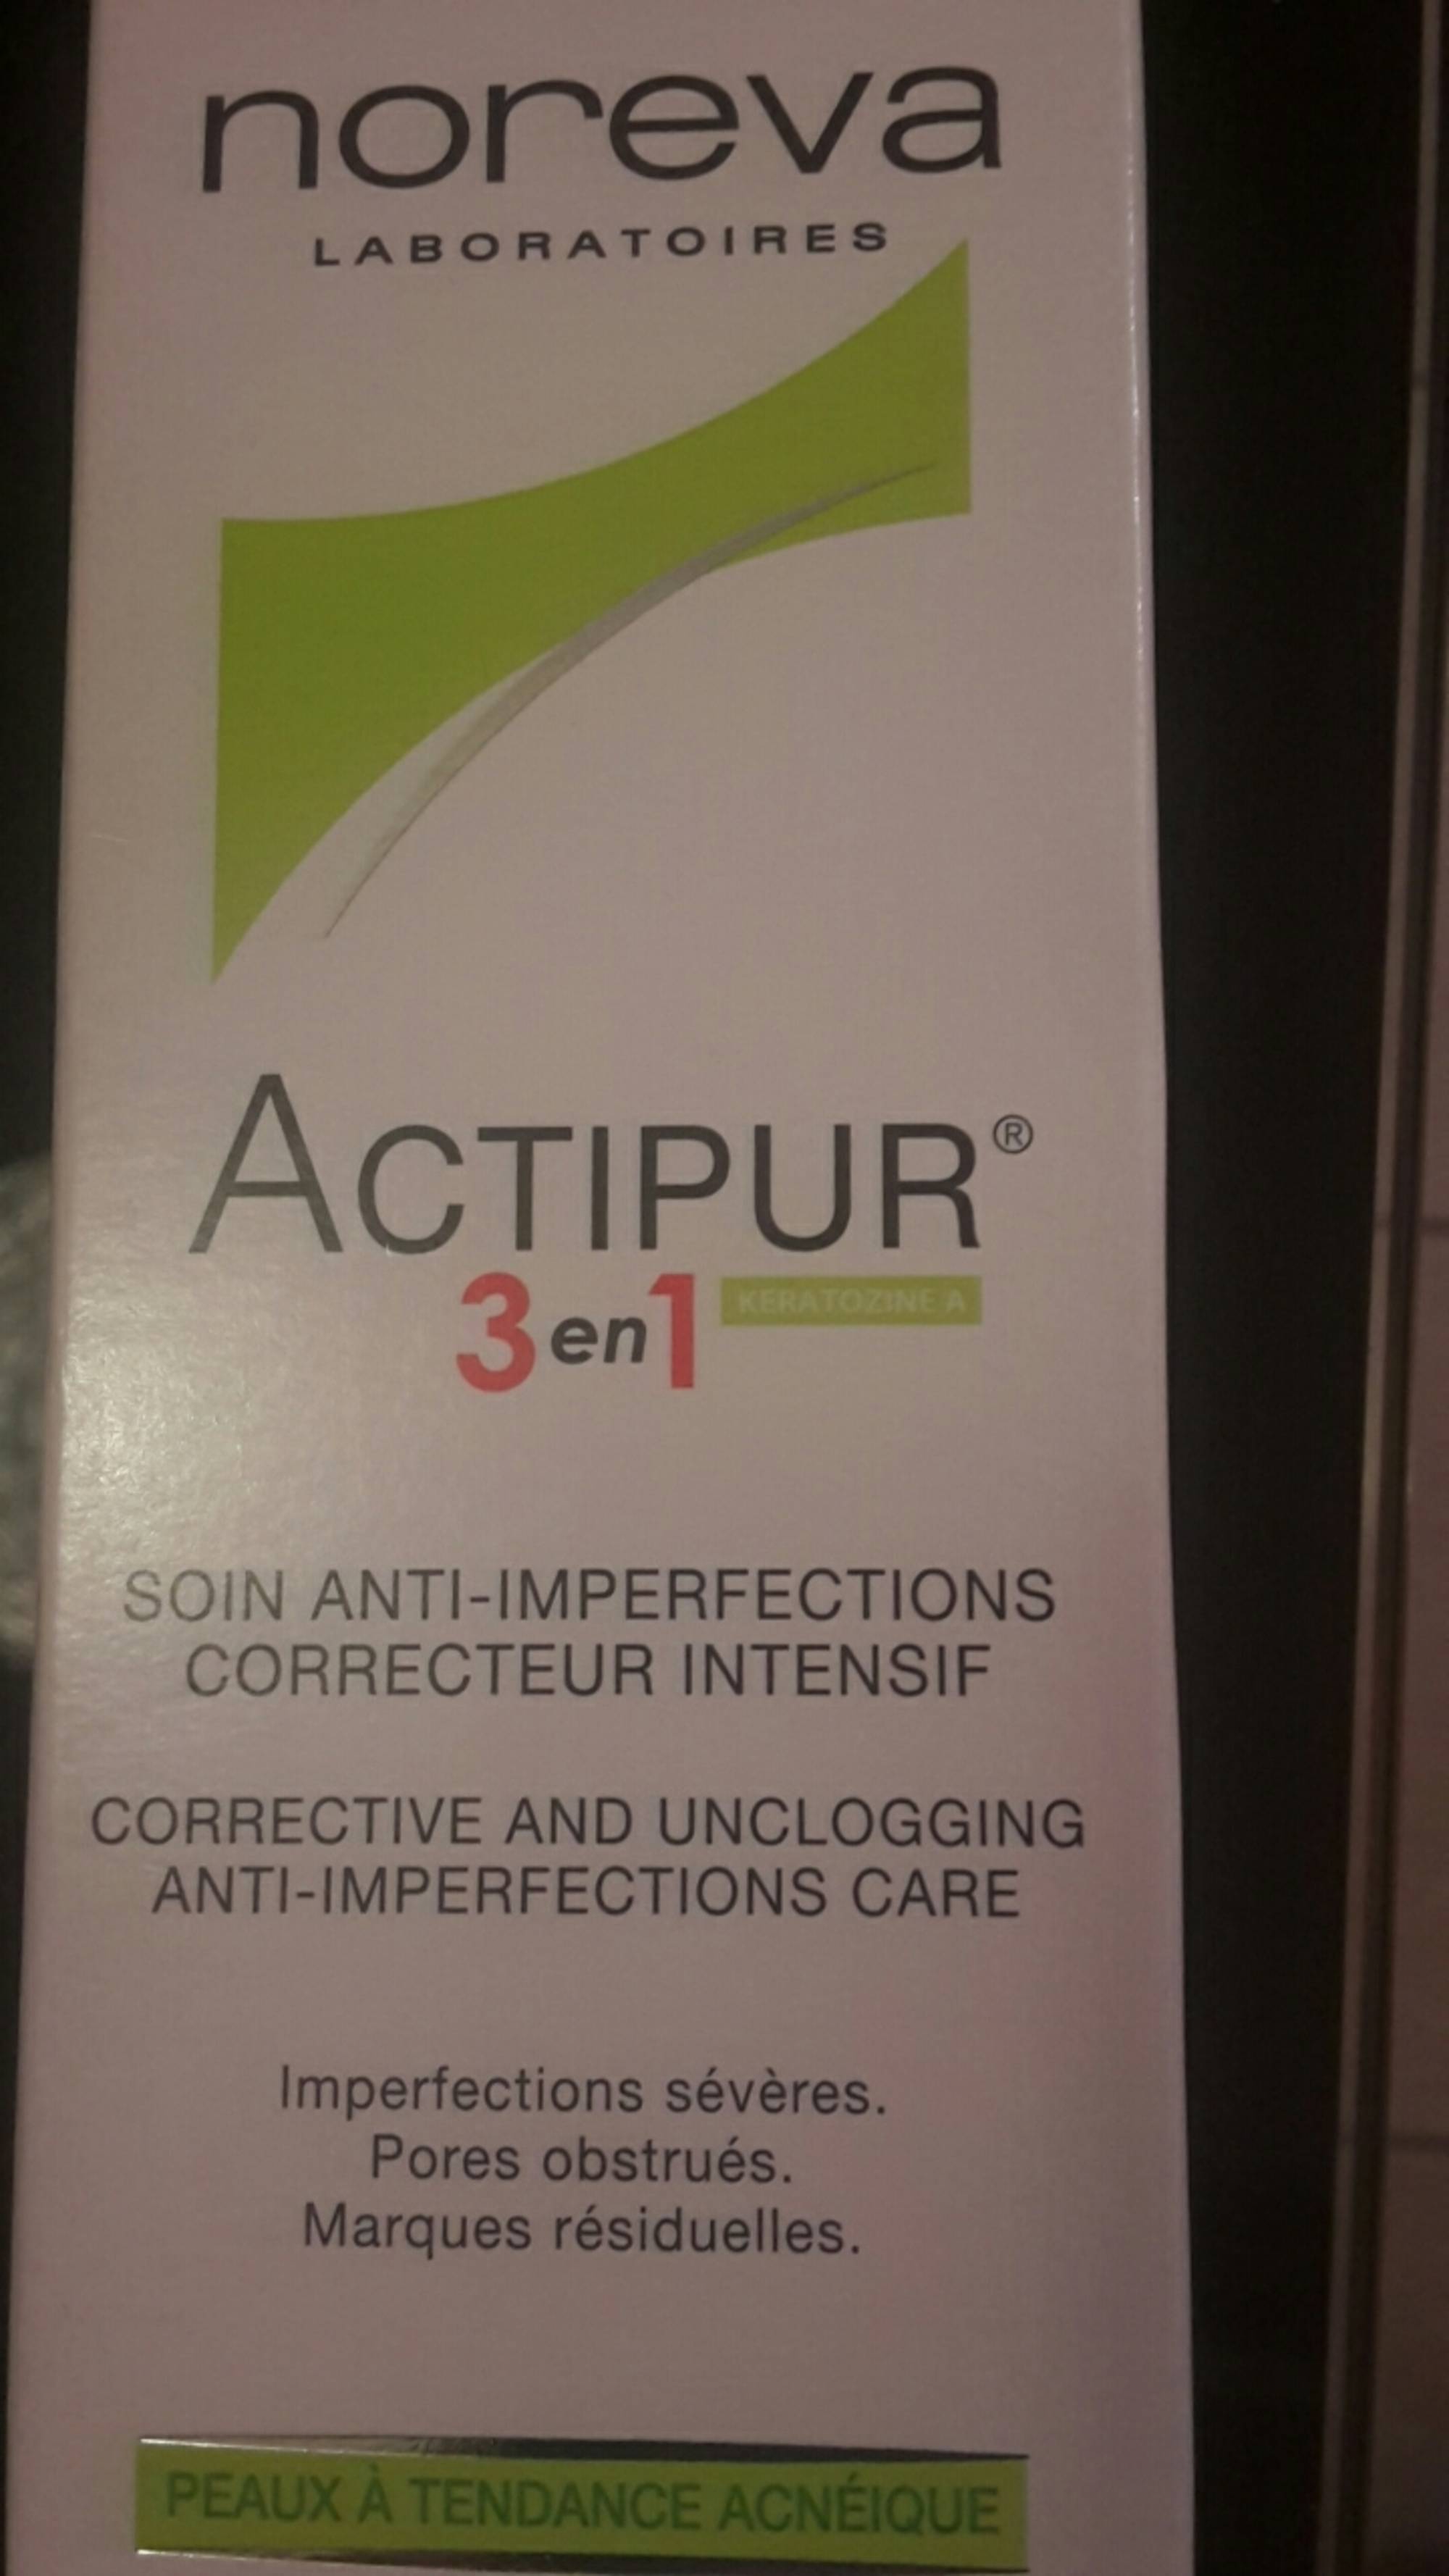 NOREVA - Actipur - 3 en 1 Soin anti-imperfections correcteur intensif